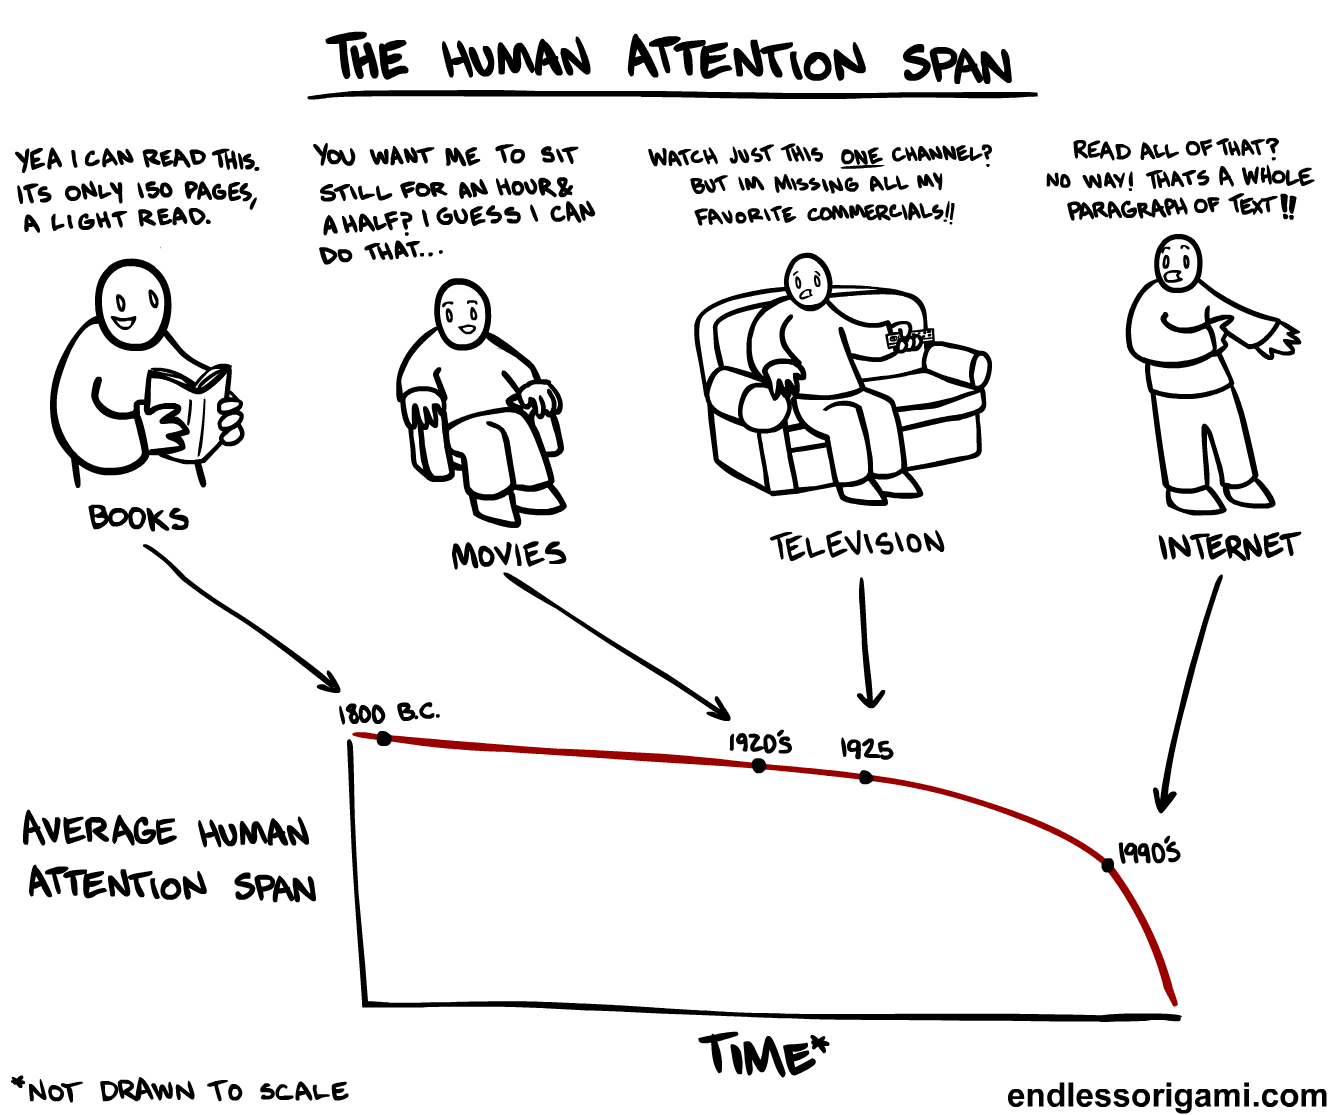 Attention spin. Span перевод. Attention span перевод. The average Human attention span. Spin перевод.